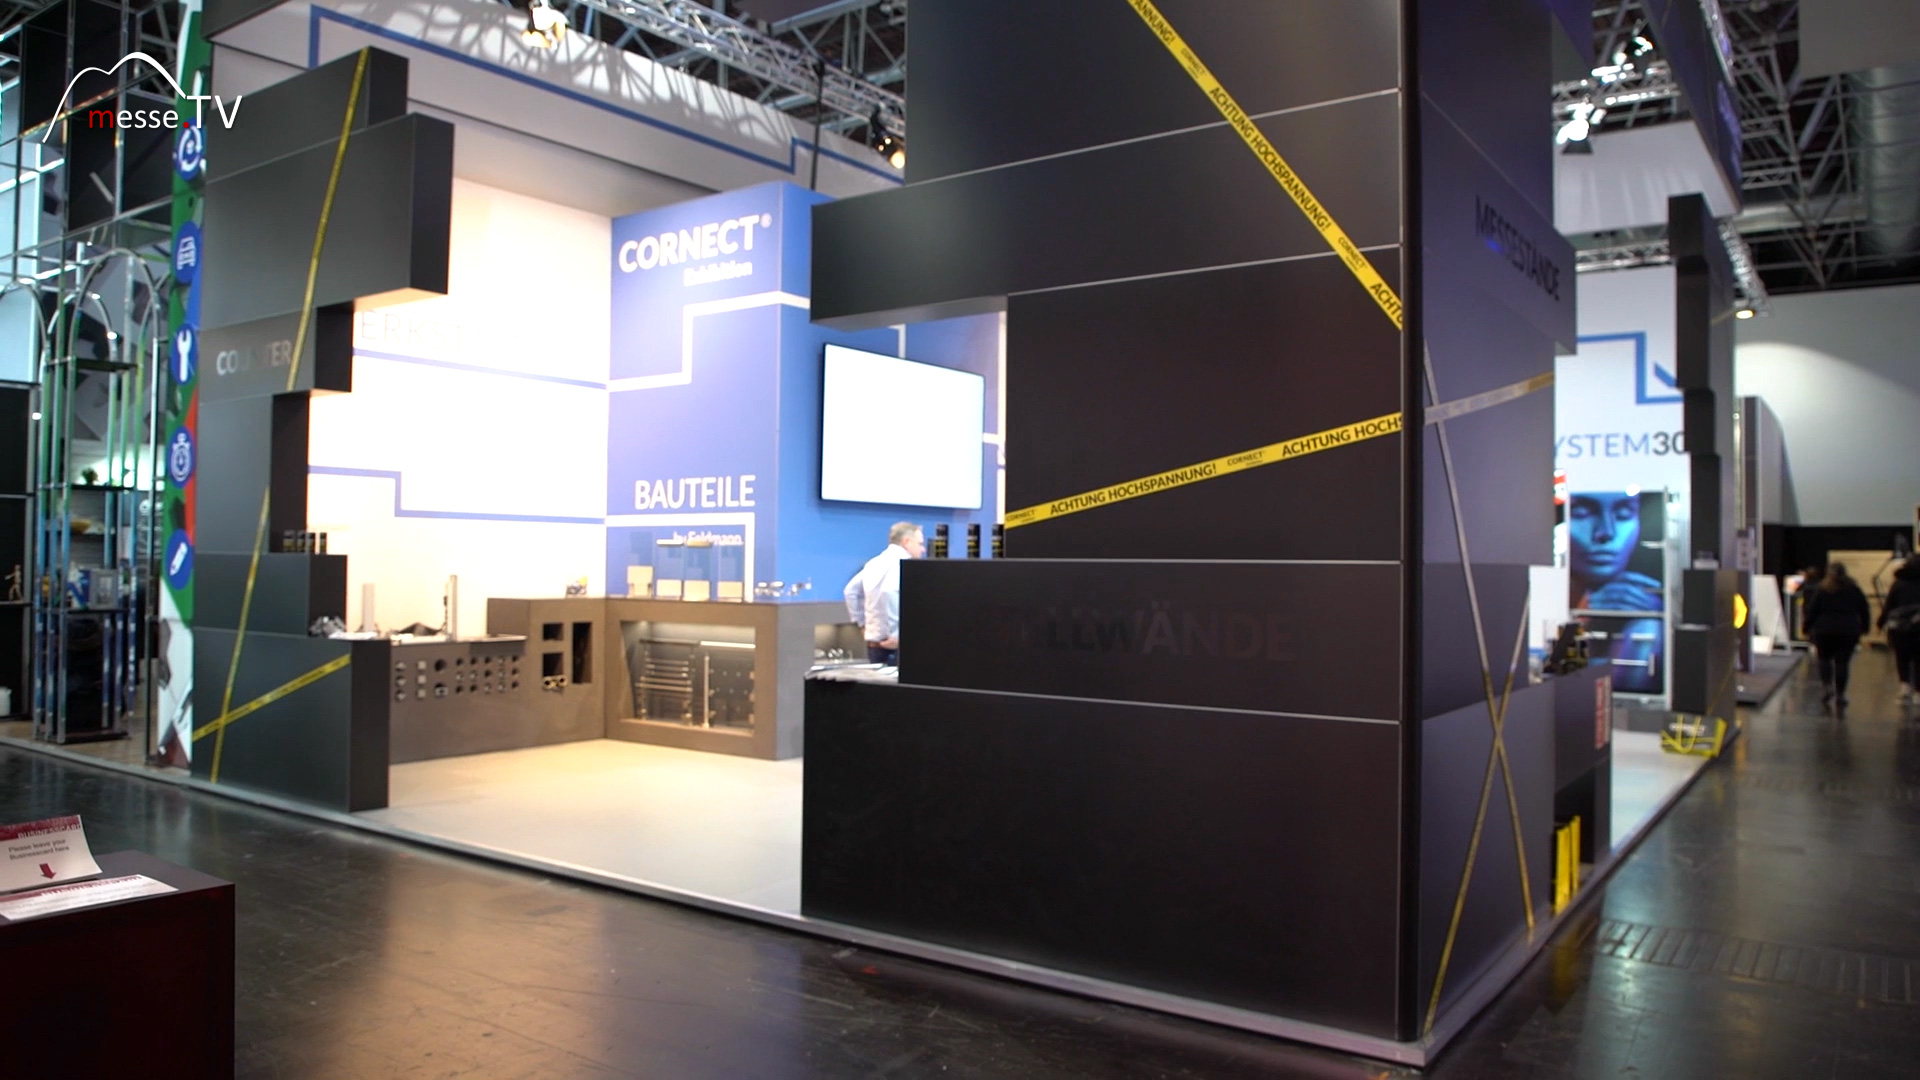 Cornect Exhibition Building System Euroshop 2020 Dusseldorf